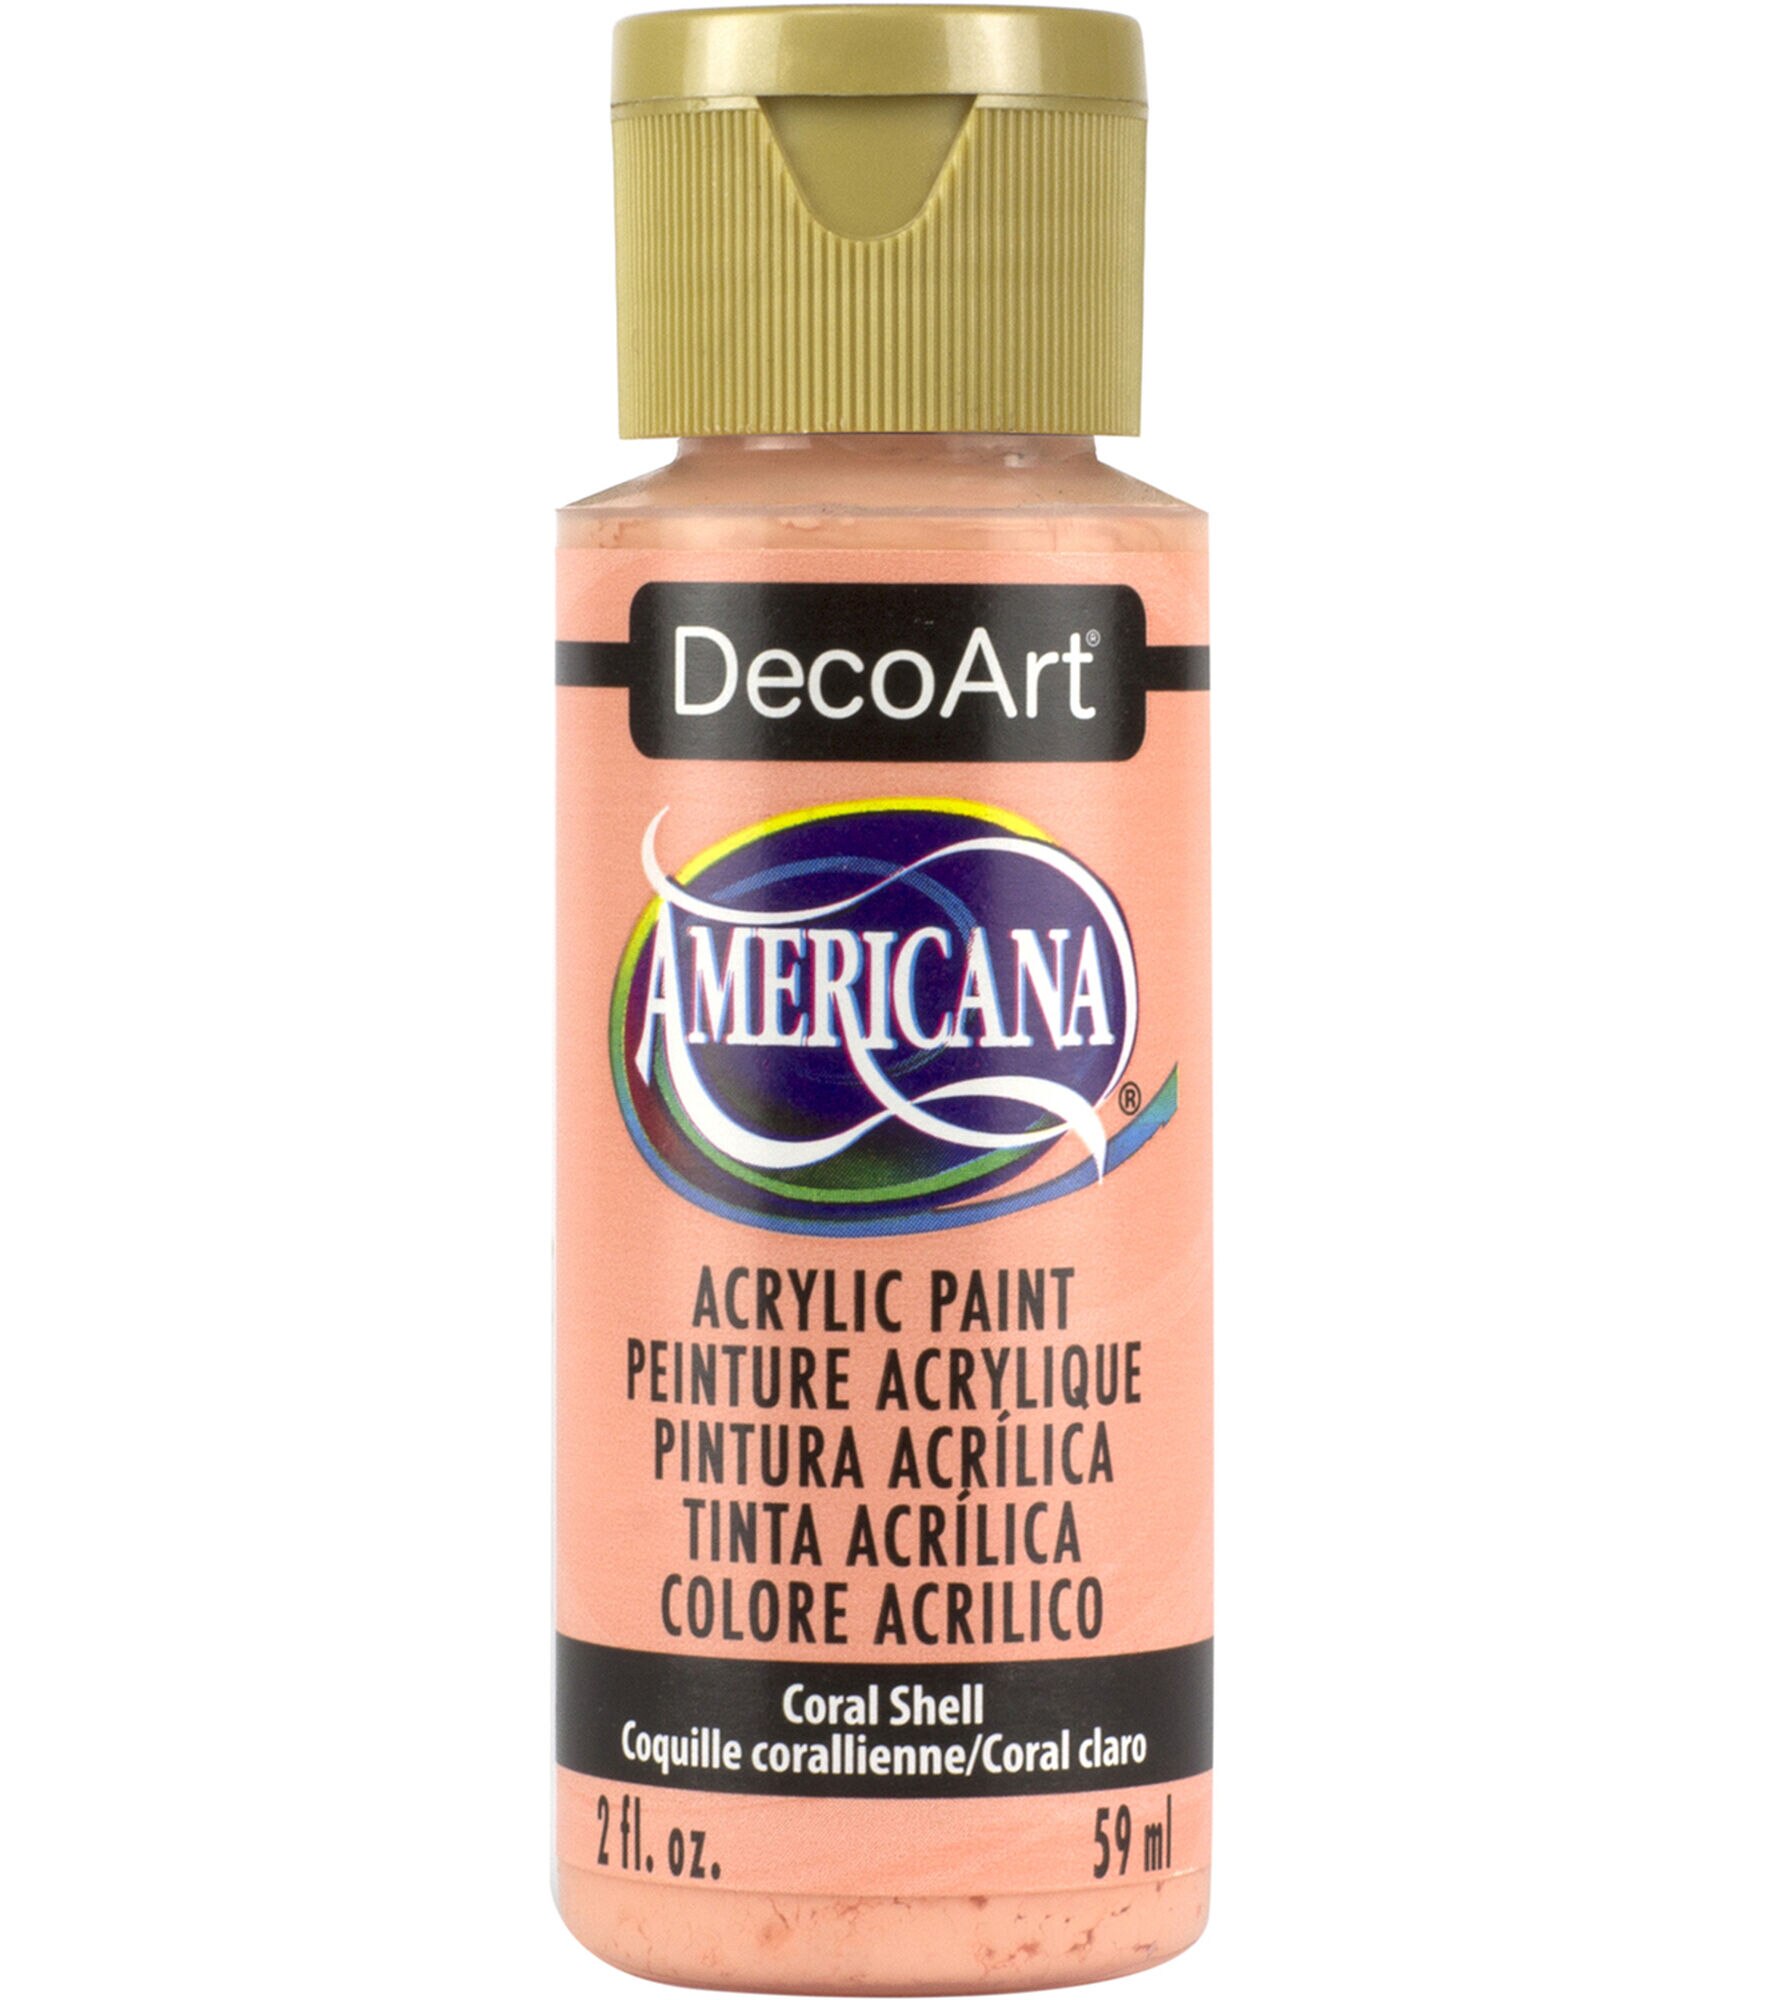 DecoArt Americana Acrylic 2oz Paint, Coral Shell, hi-res